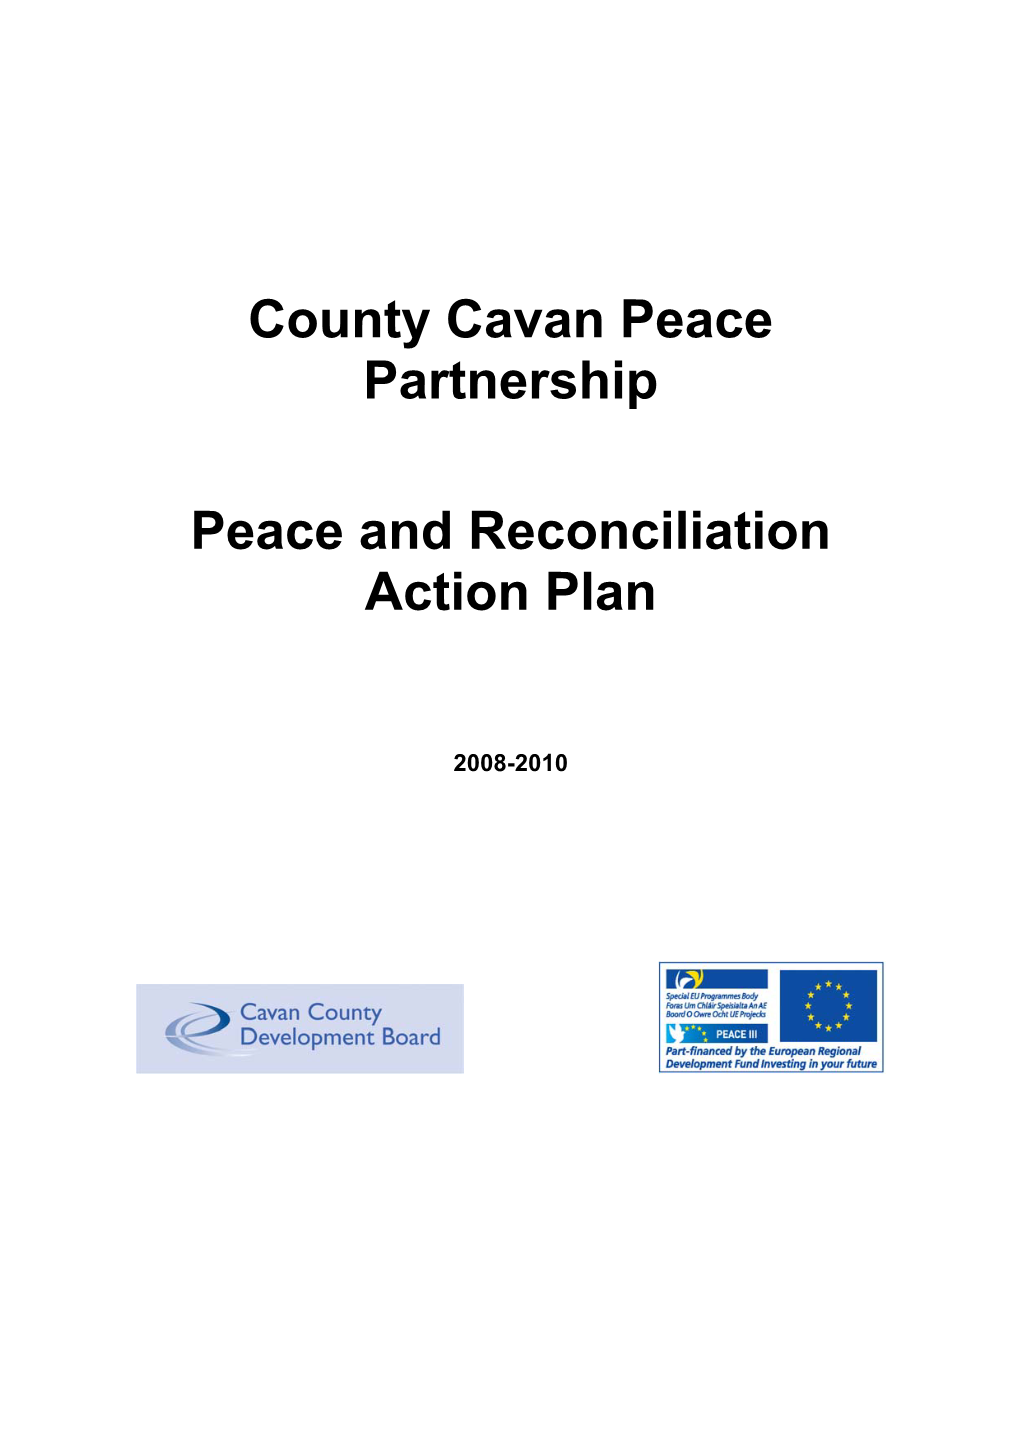 County Monaghan Peace Partnership